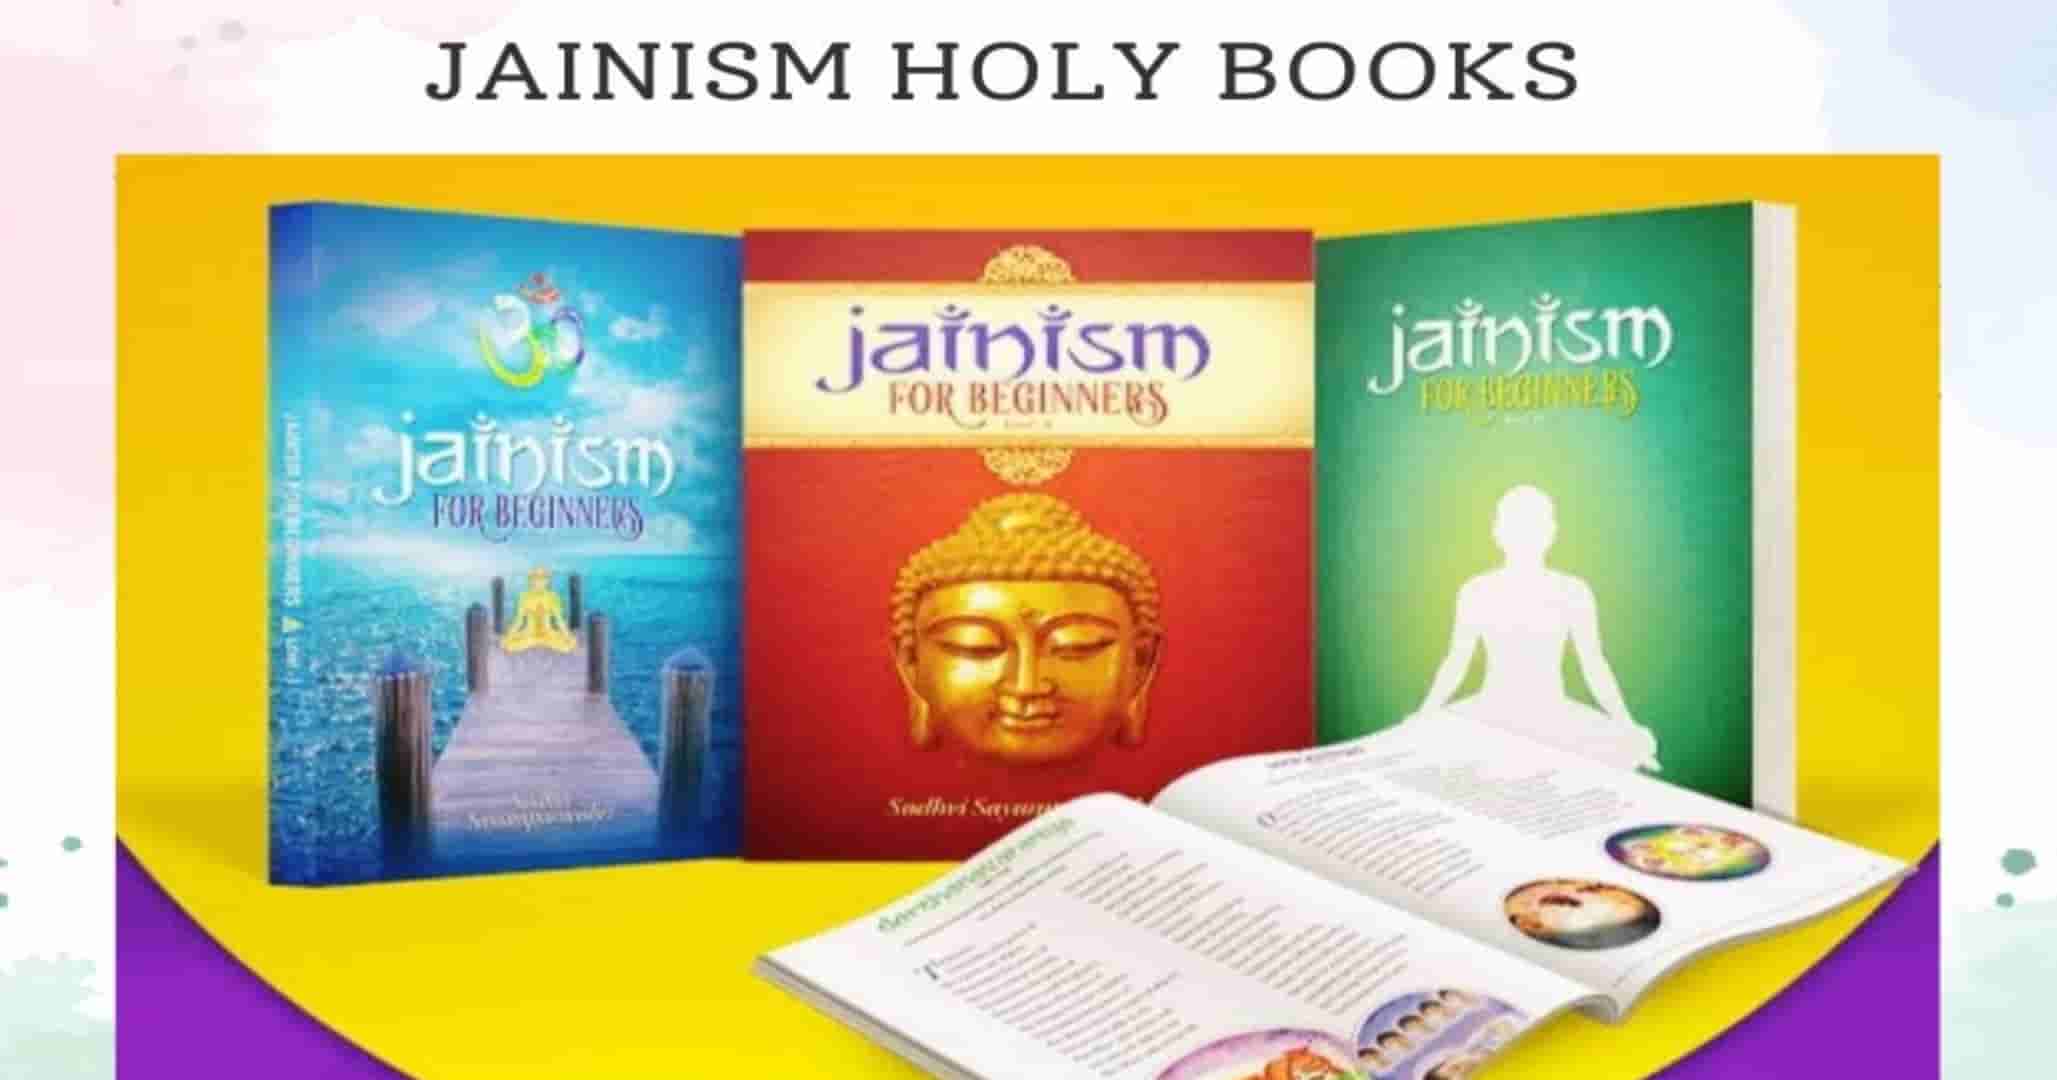 Holy book of Jainism